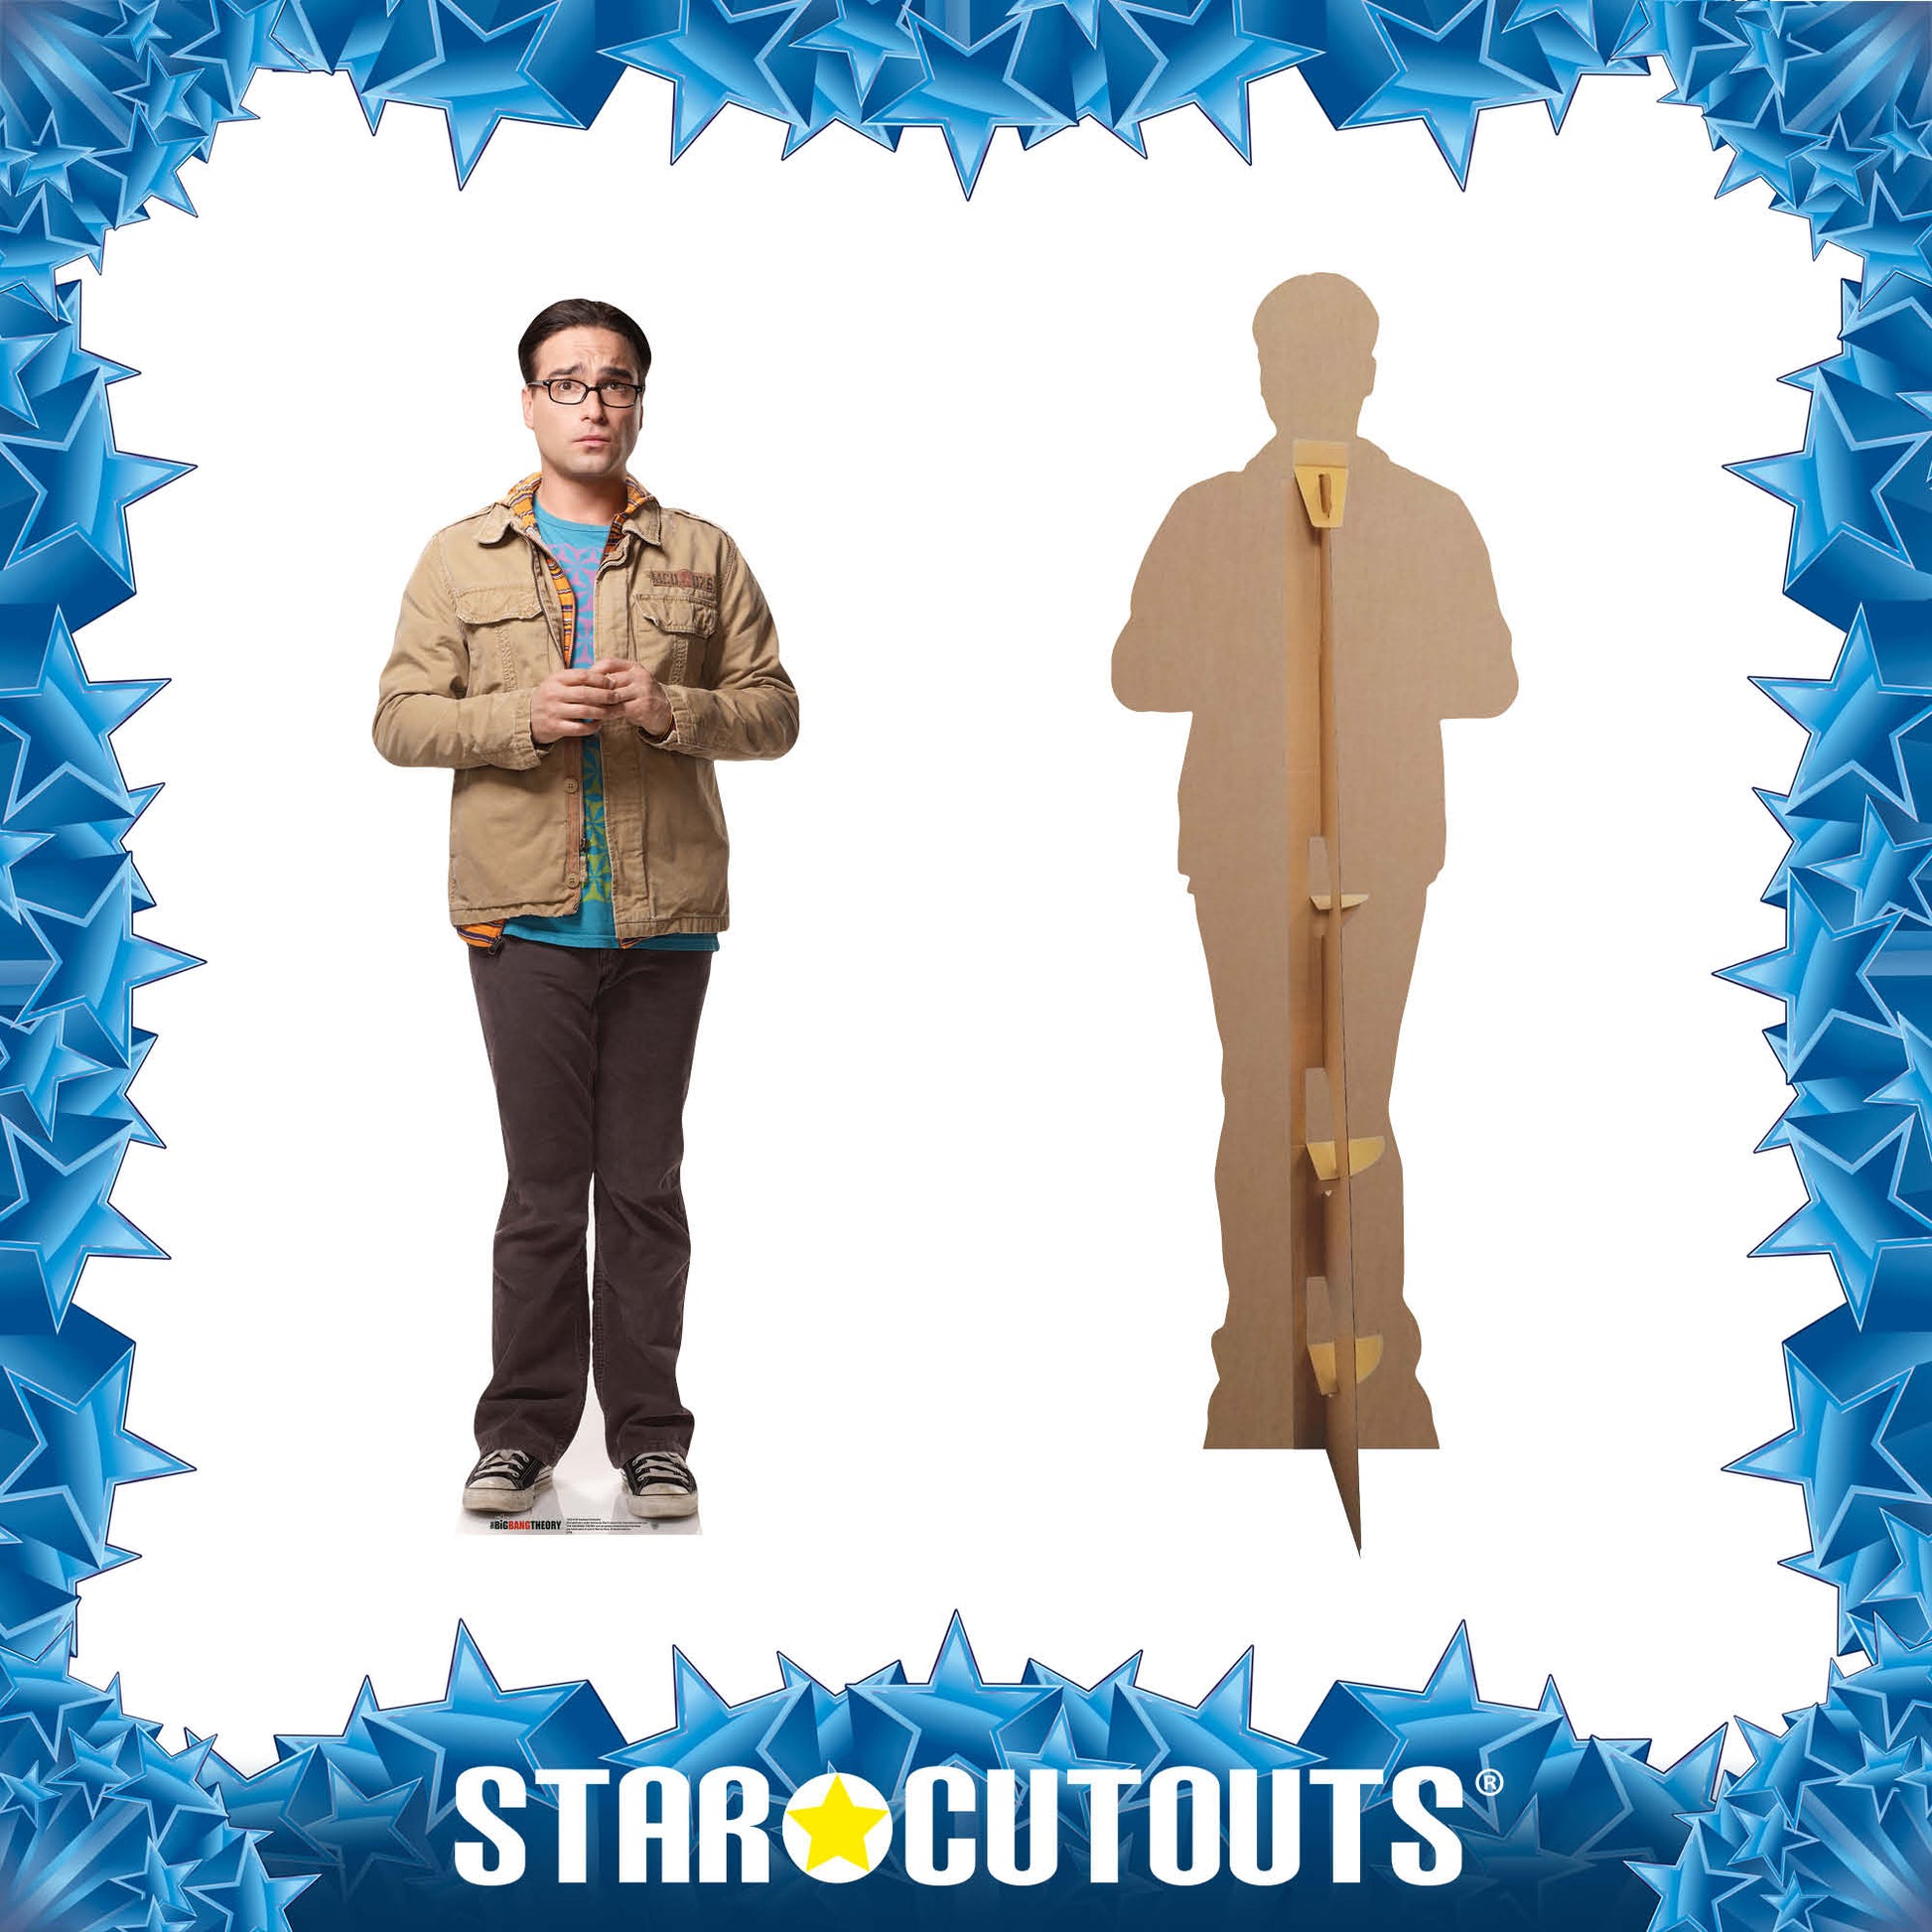 Dr Leonard Hofstadter Cardboard Cutout